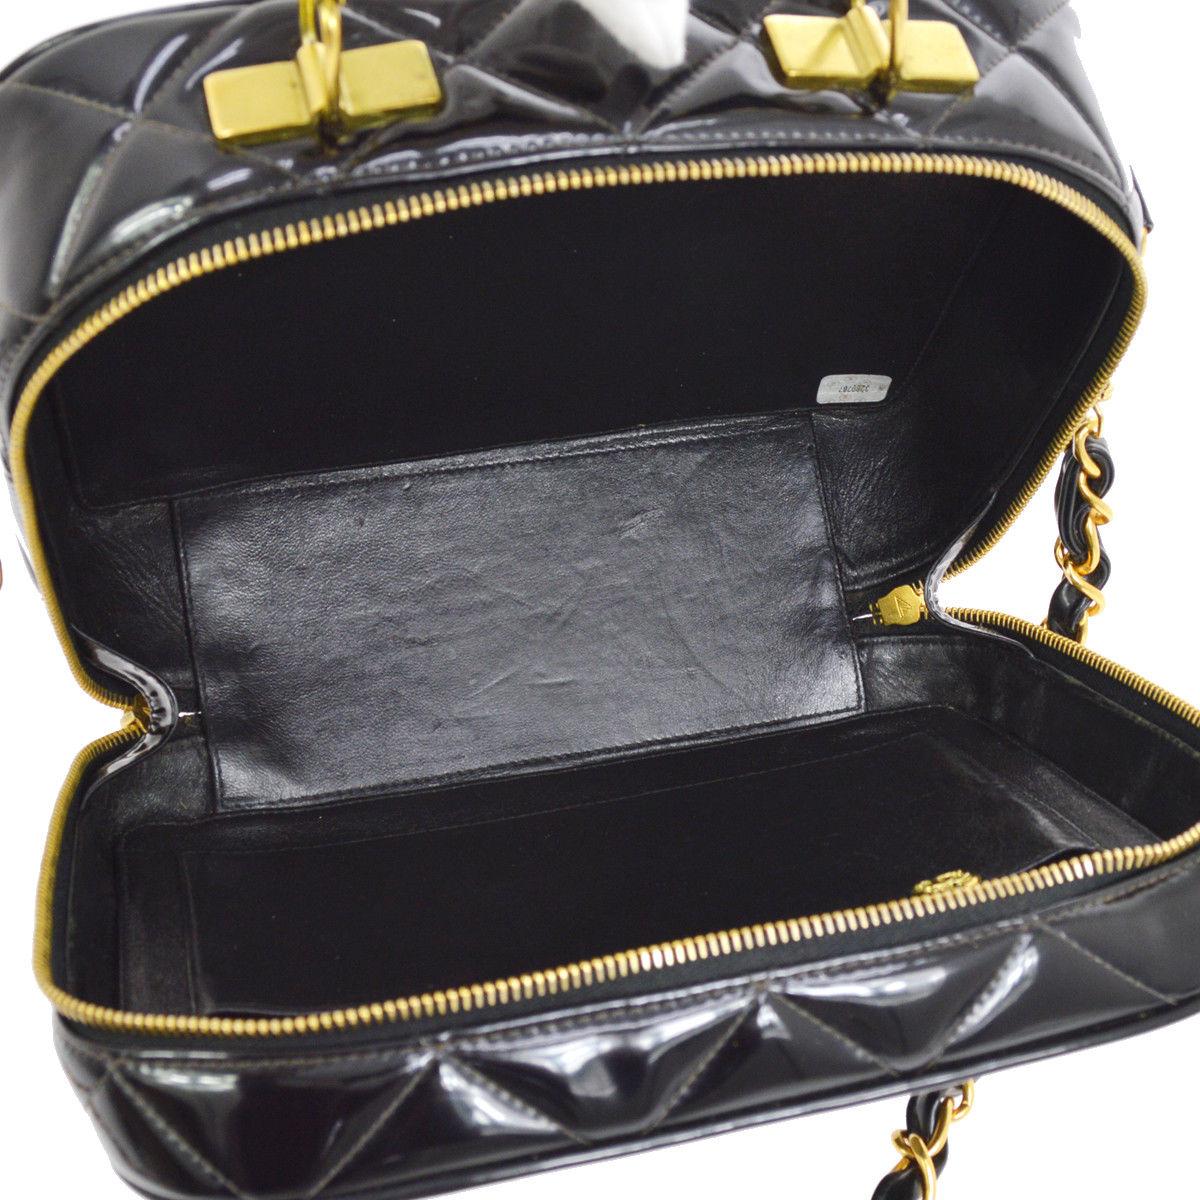 Chanel Black Patent Leather Lunch Travel Top Handle Satchel Tote Shoulder Bag 3